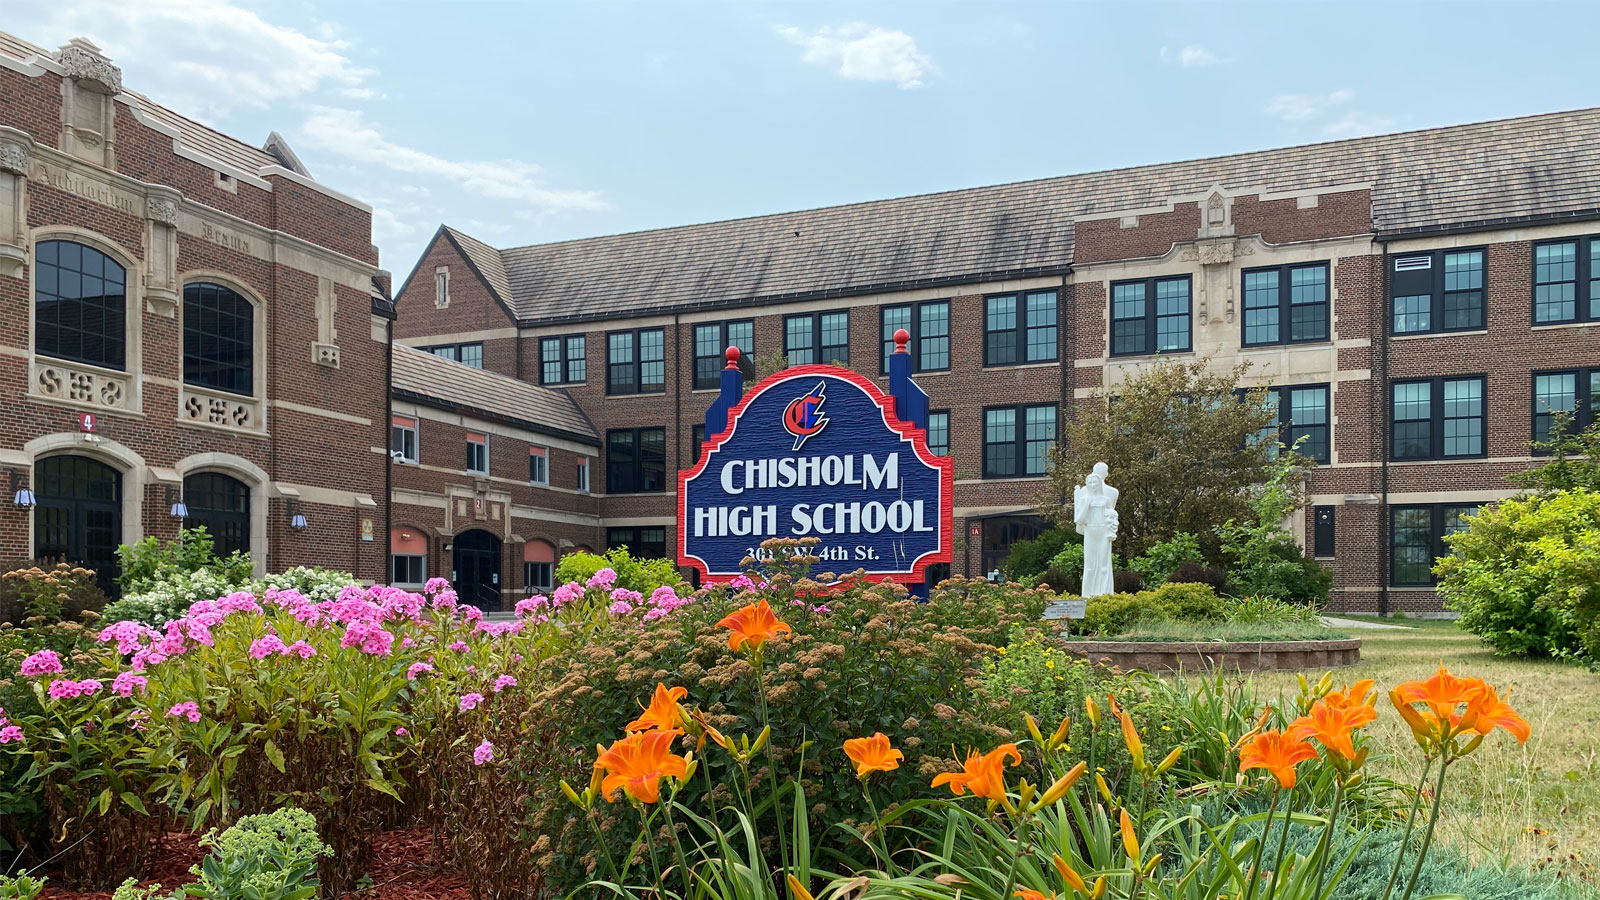 Chisholm High School